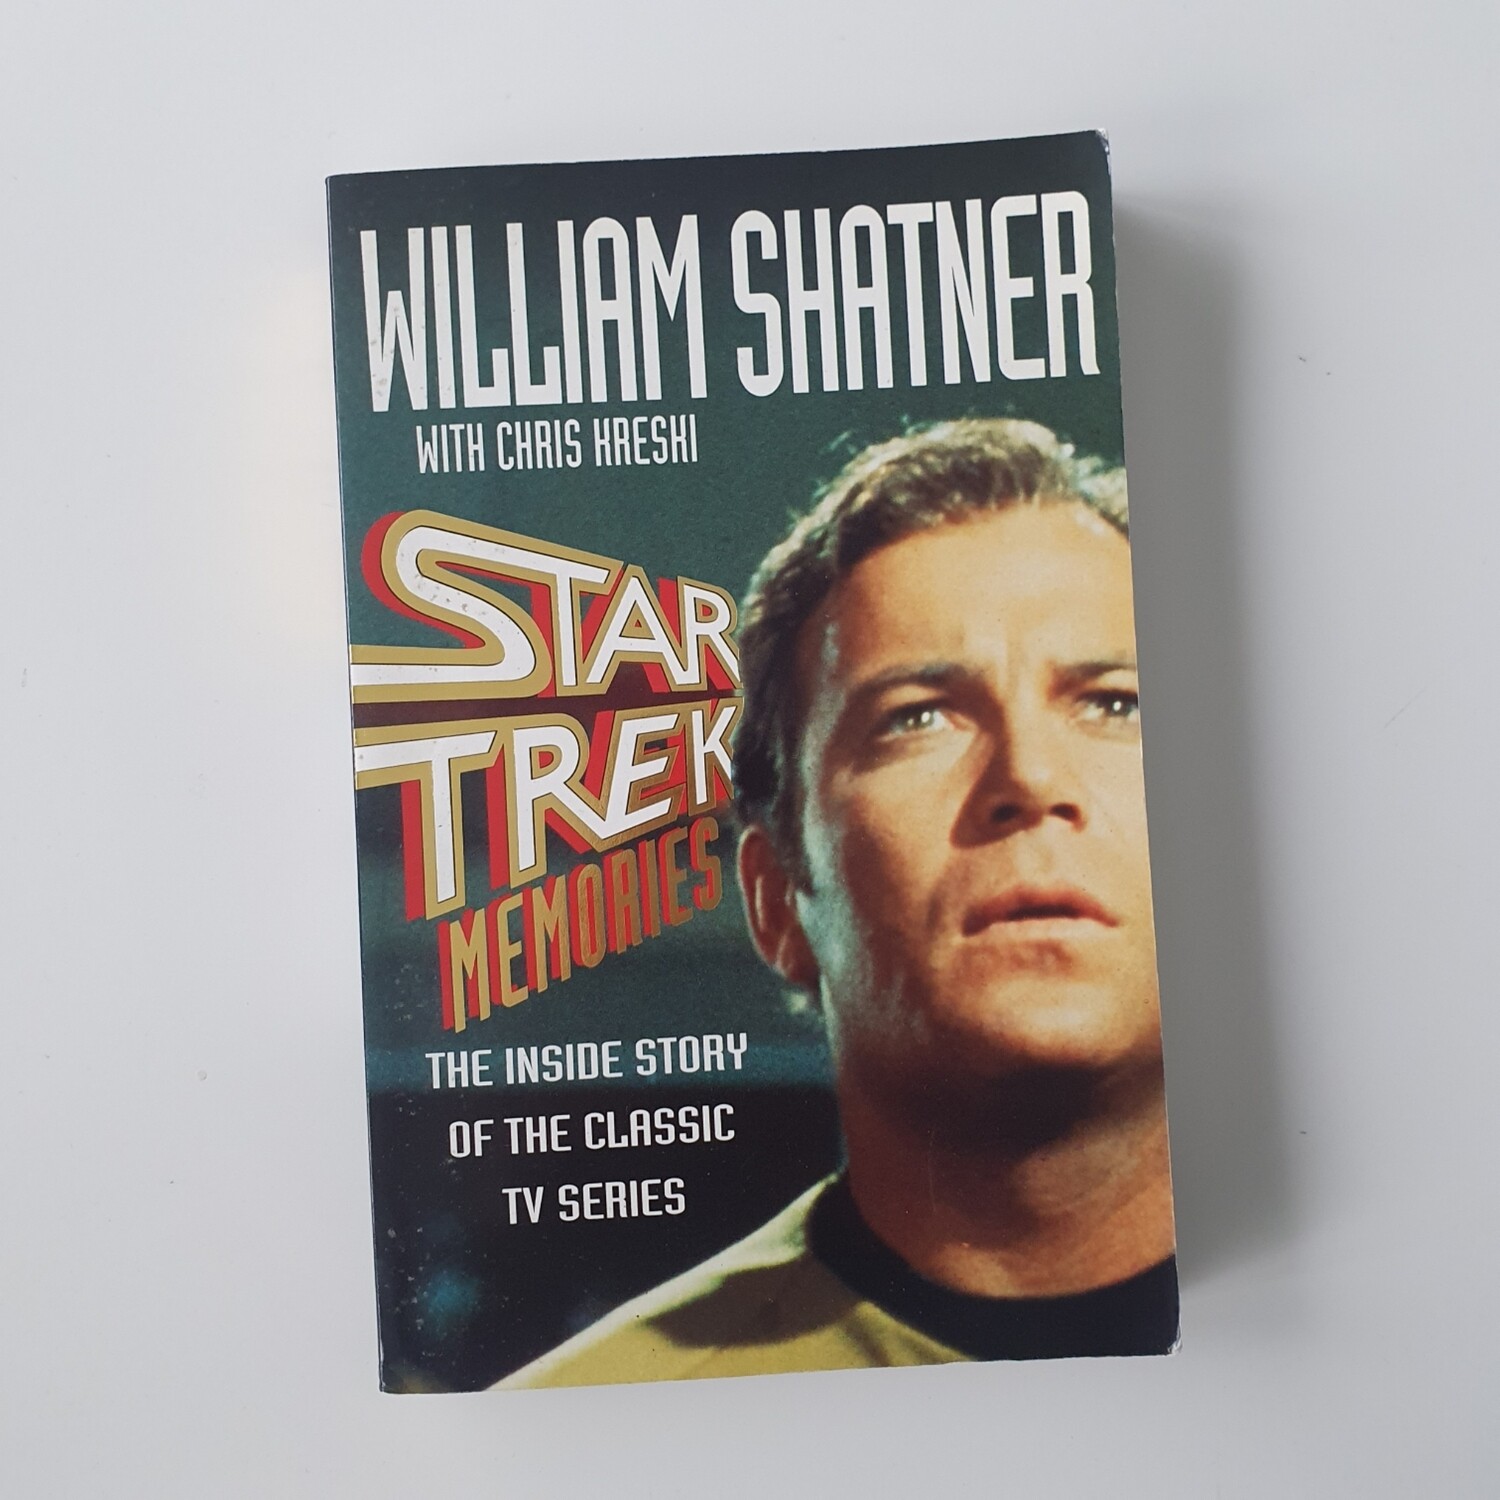 Star Trek memories - made from a paperback book